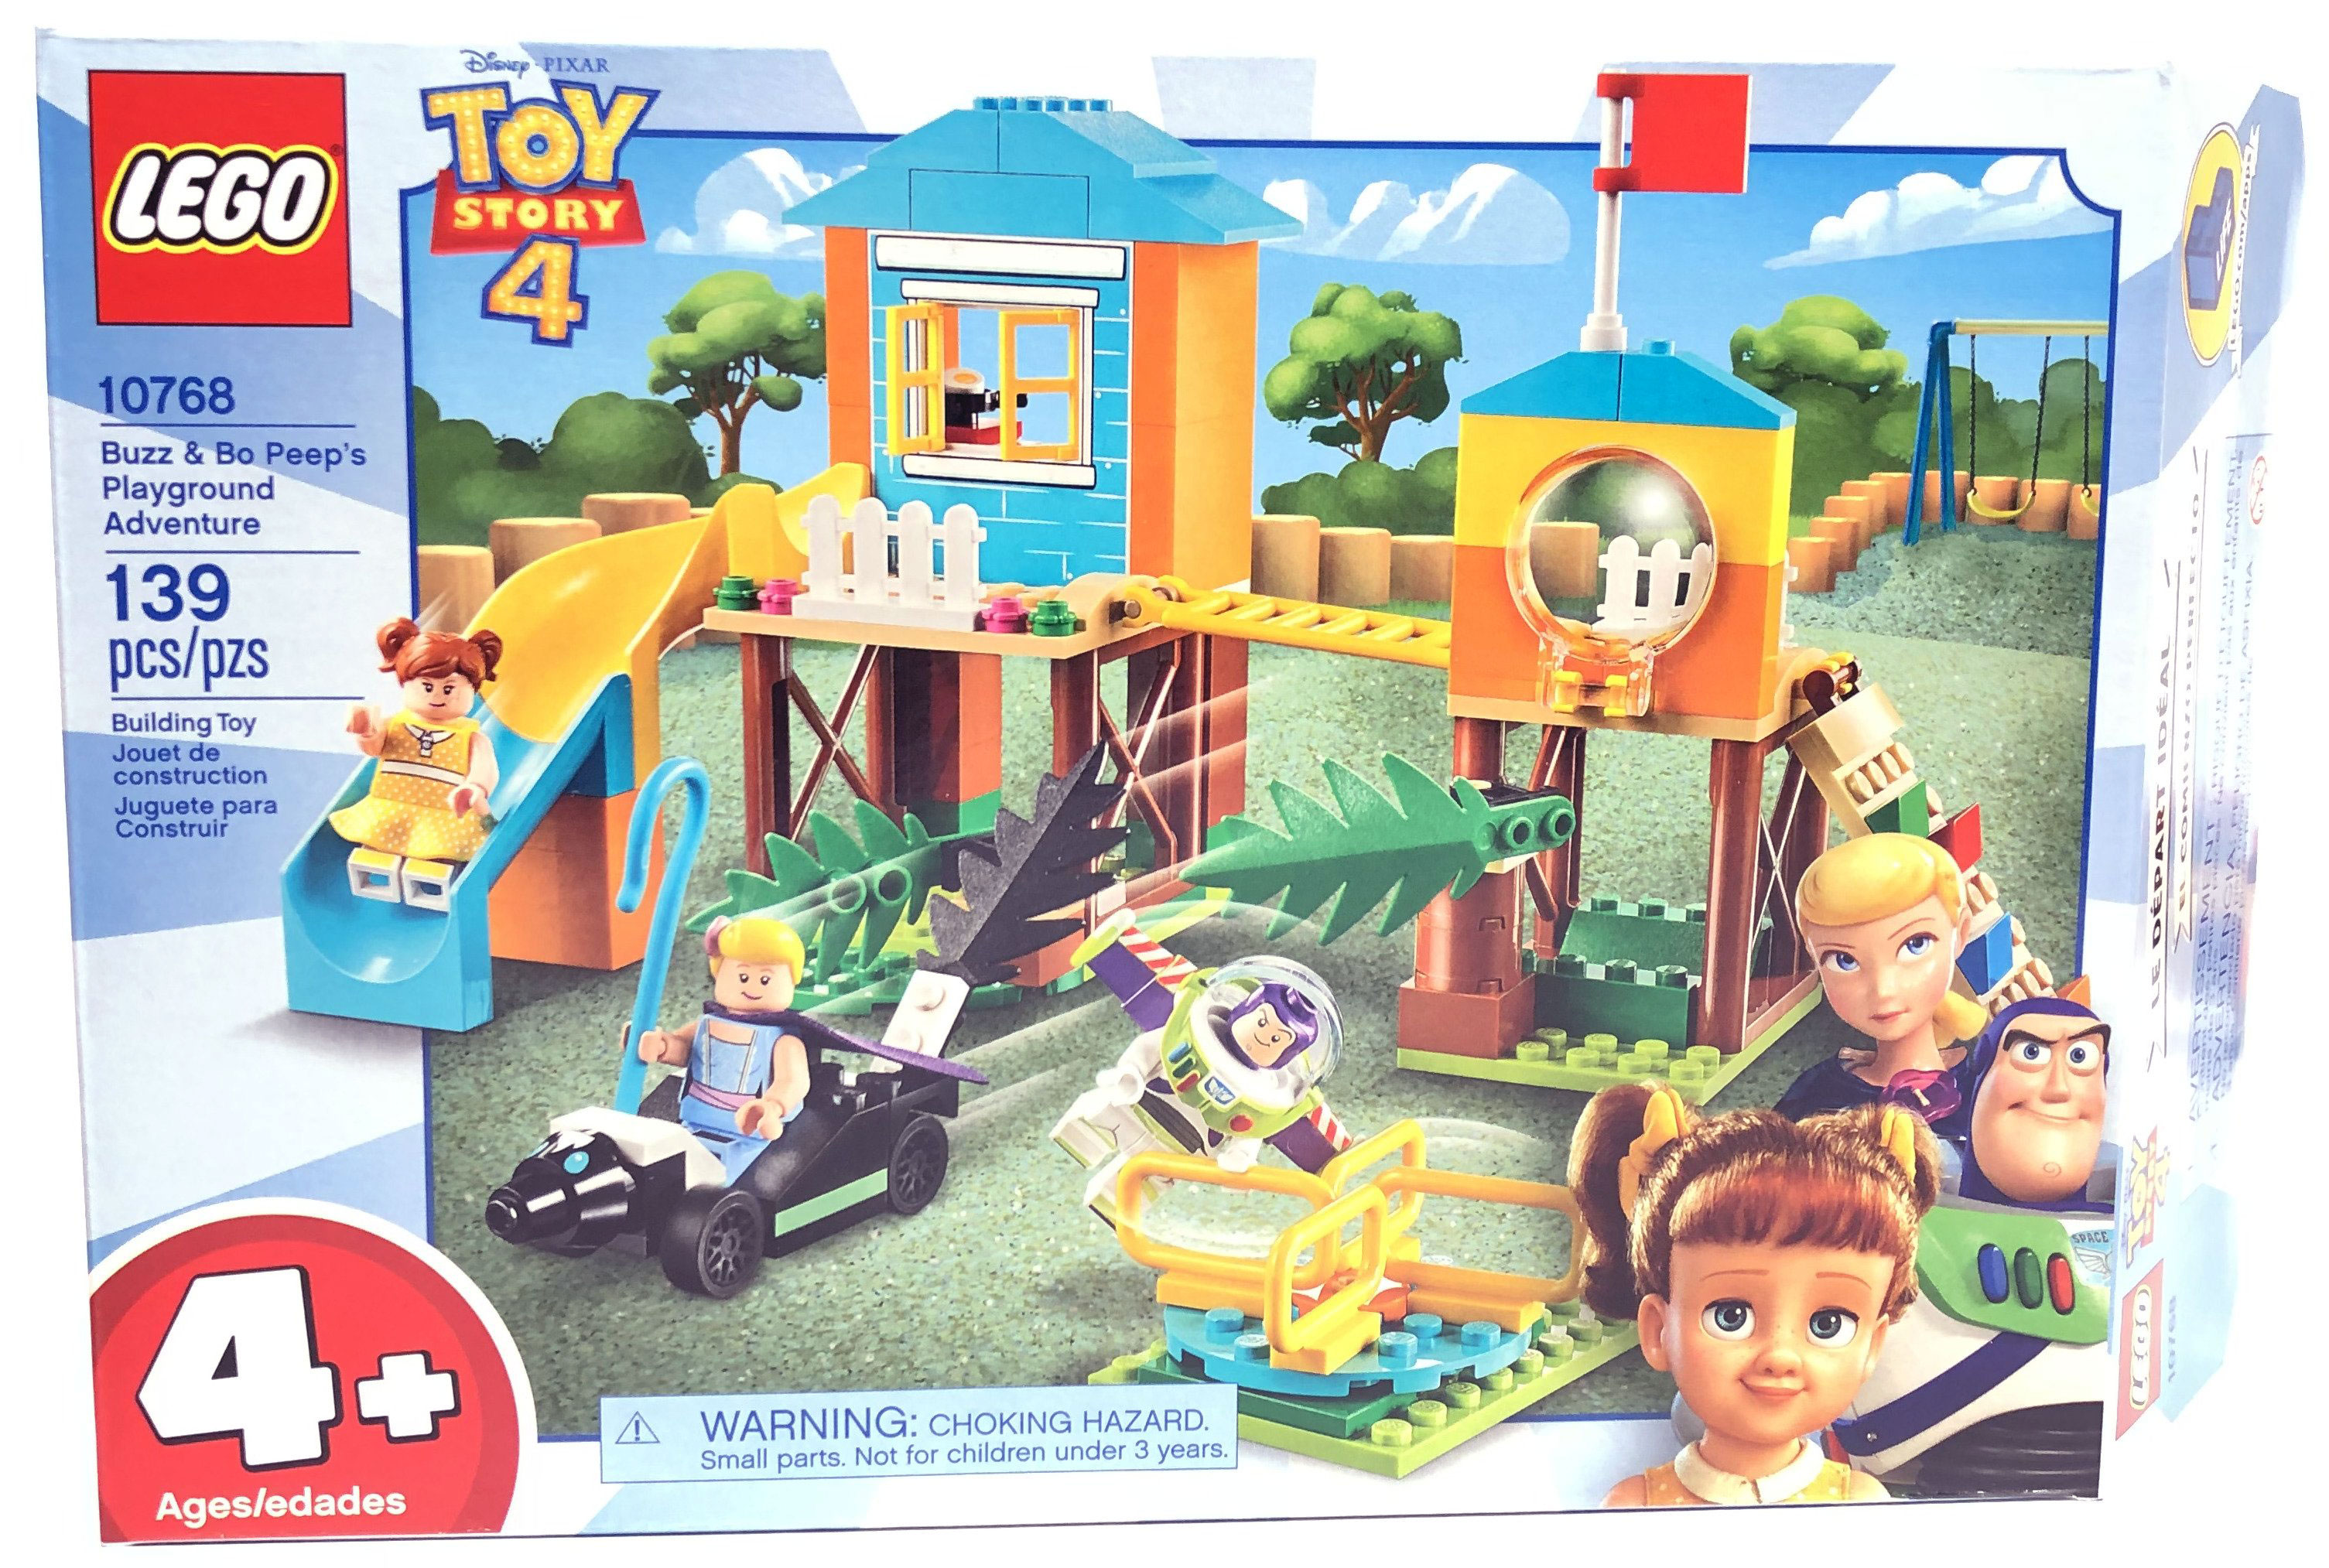 LEGO Toy Story 4 Buzz & Bo Peep's Playground Adventure (10768)